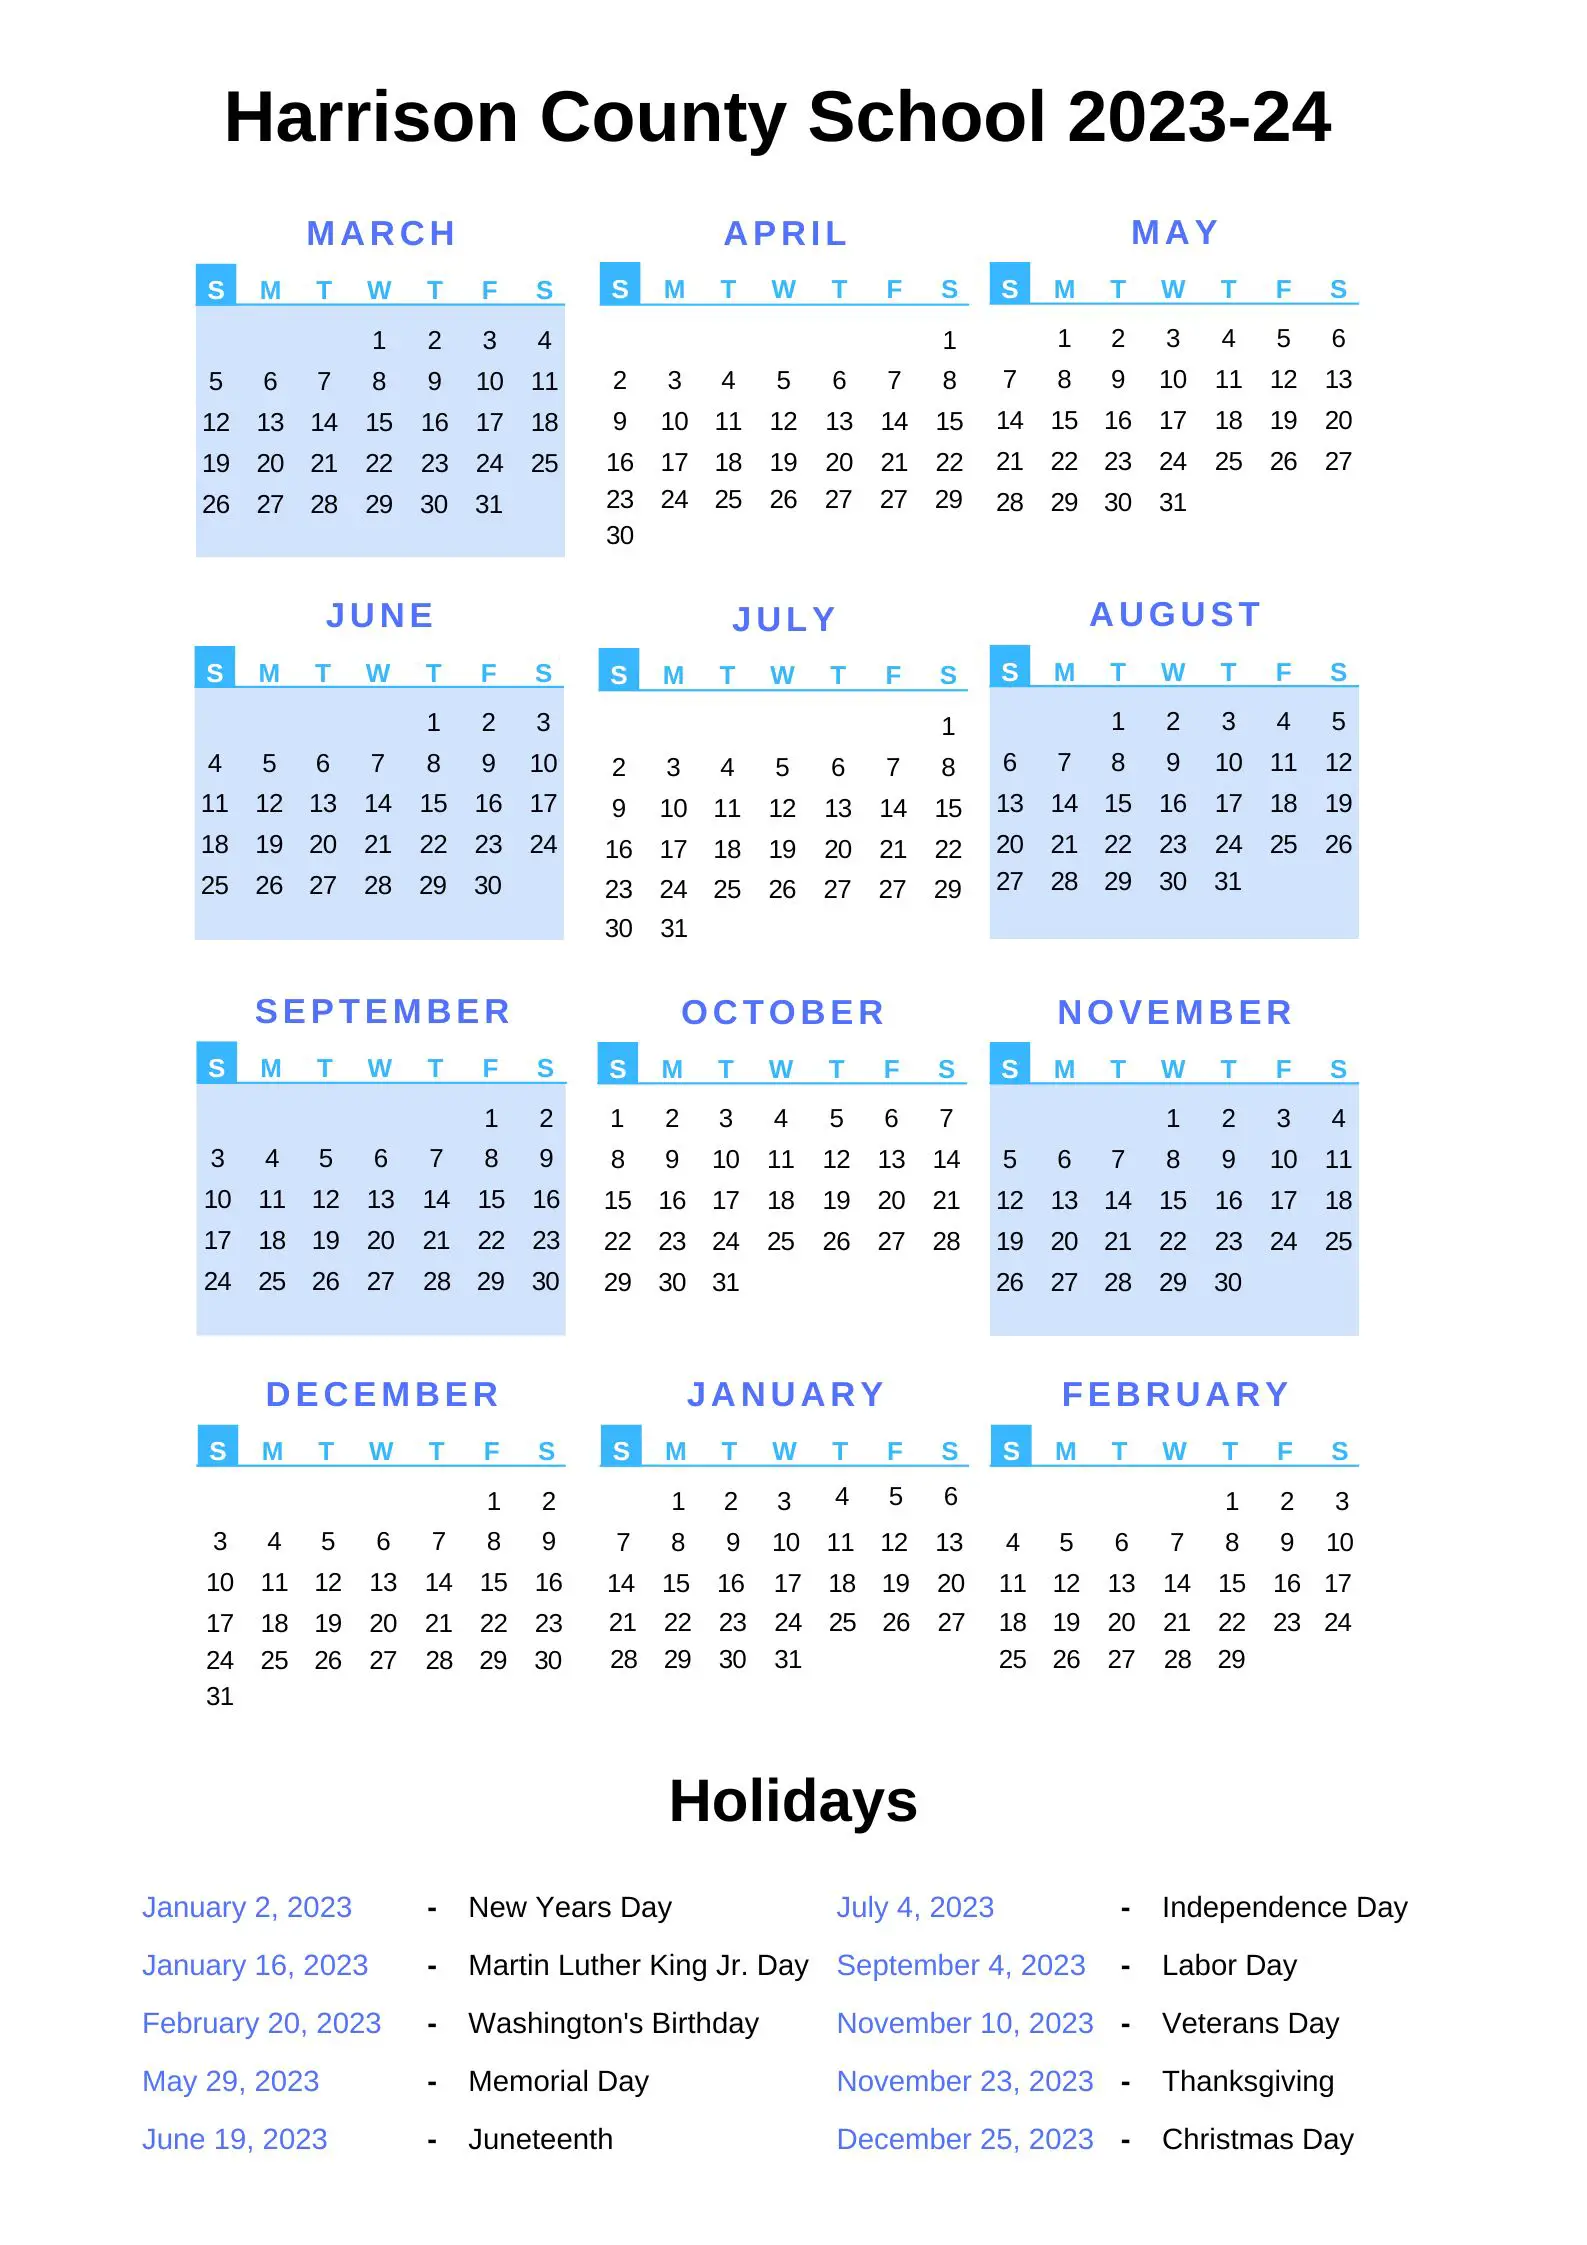 Harrison County Schools Calendar 2023 24 With Holidays